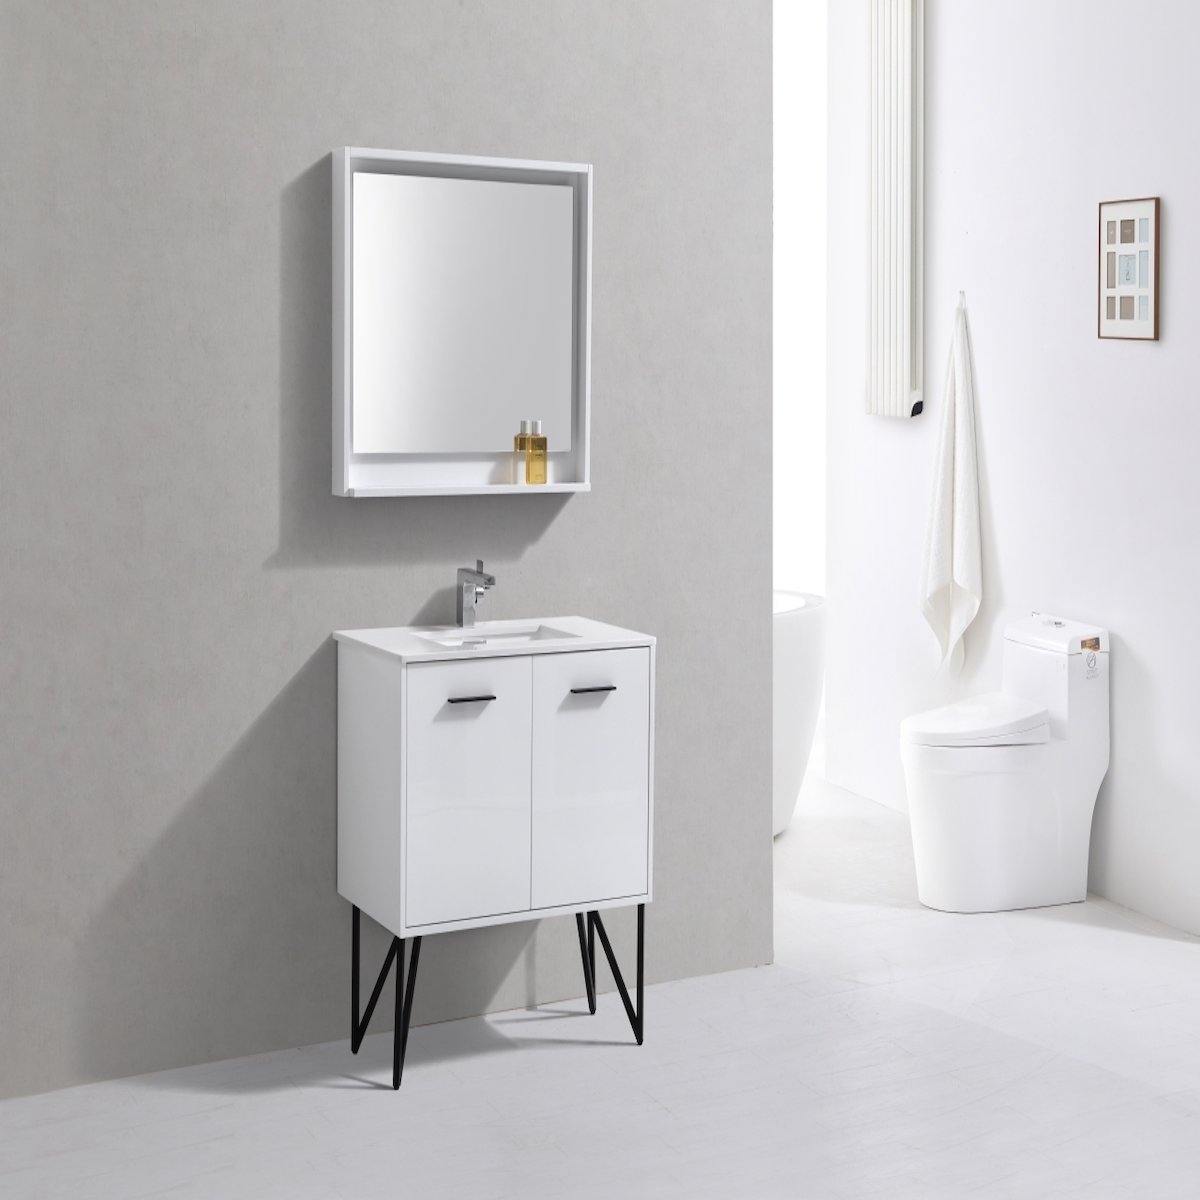 KubeBath Bosco 36" Gloss White Freestanding Single Vanity with Quartz Countertop KB36-GW in Bathroom #finish_high gloss white